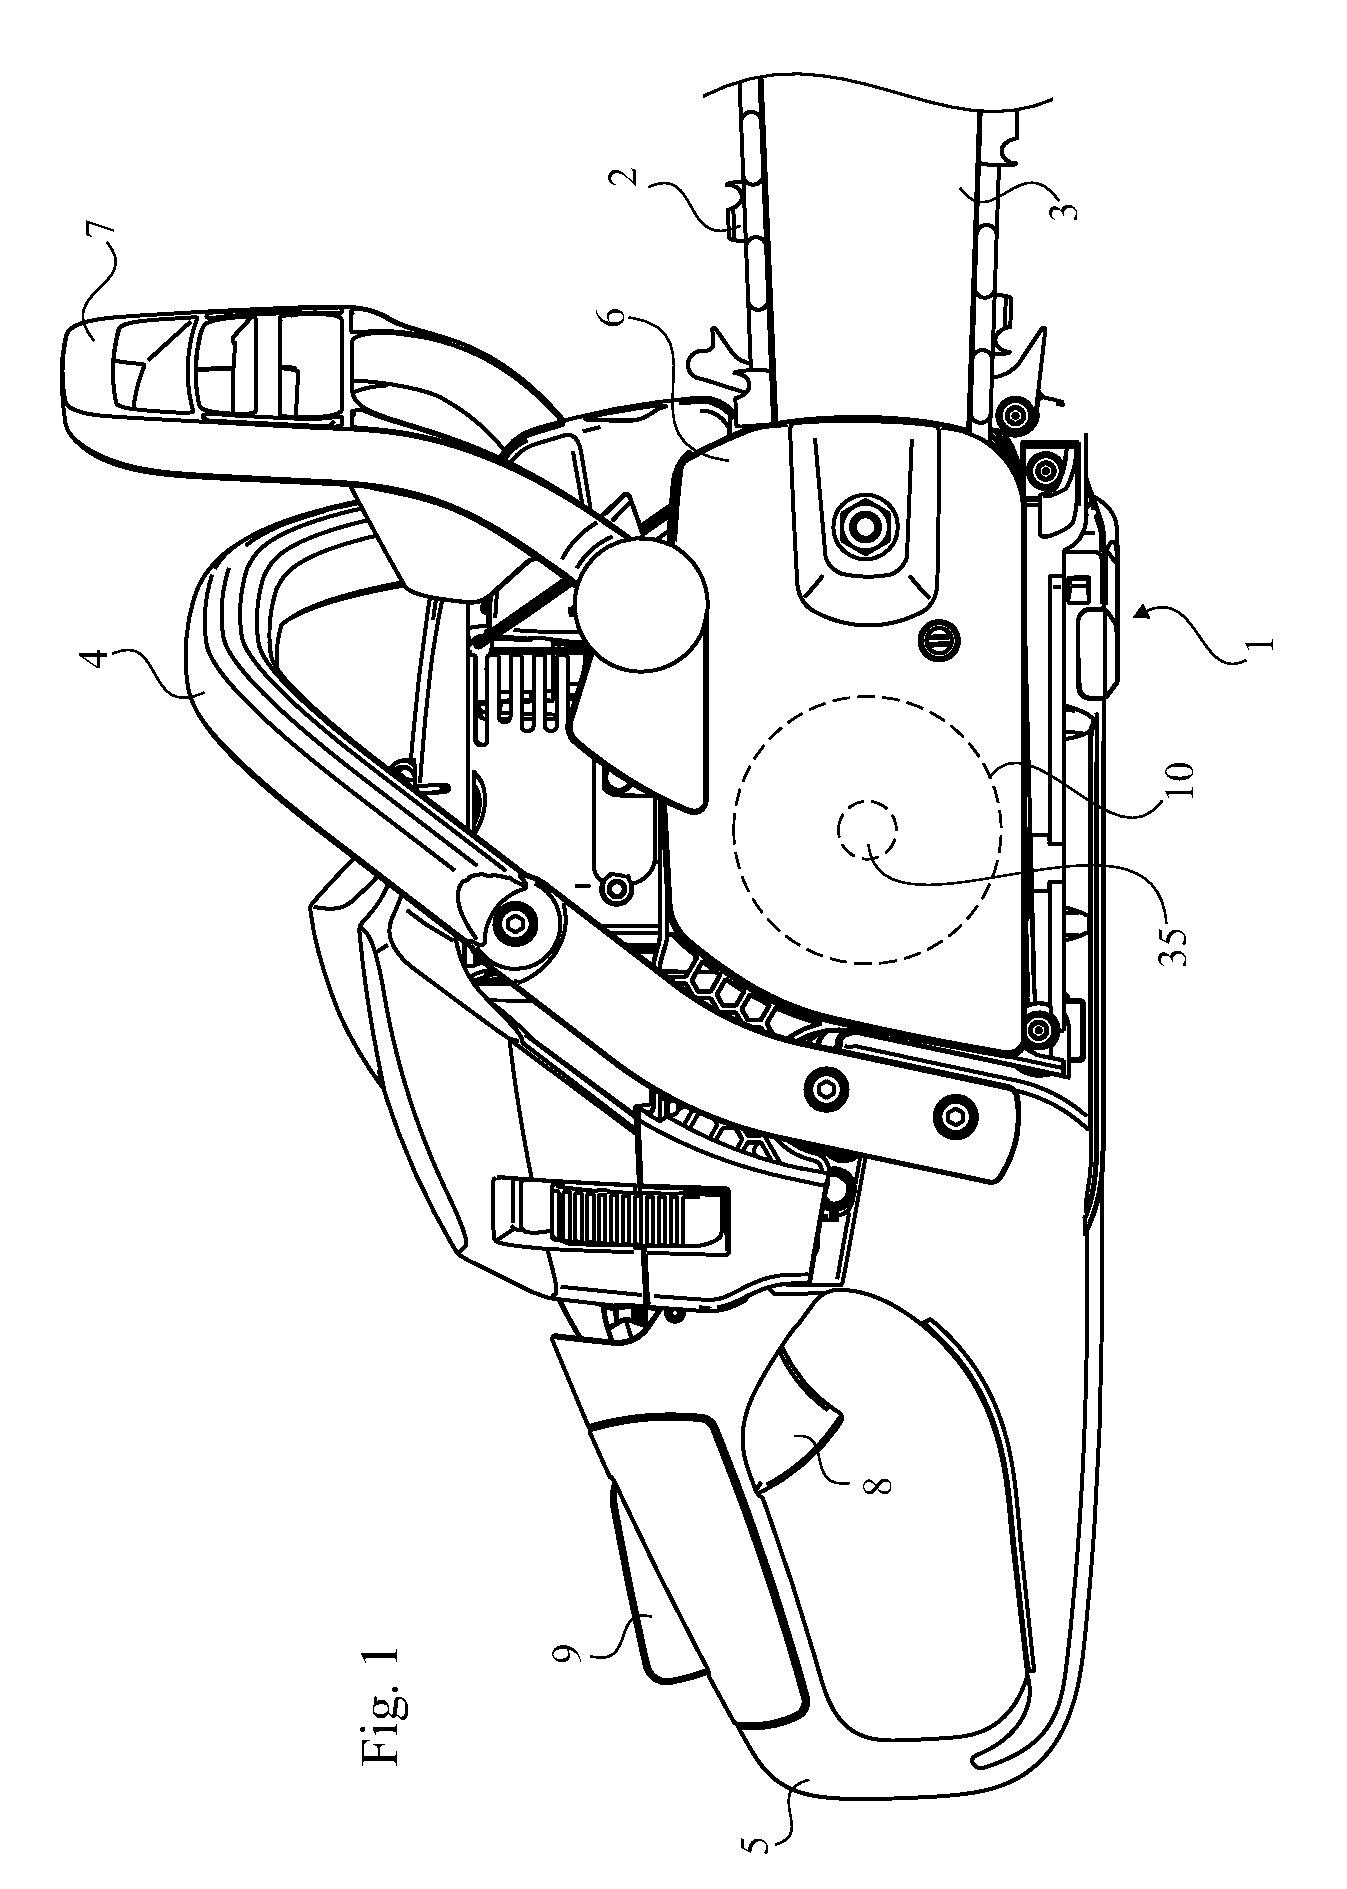 Coasting brake arrangement for a power tool